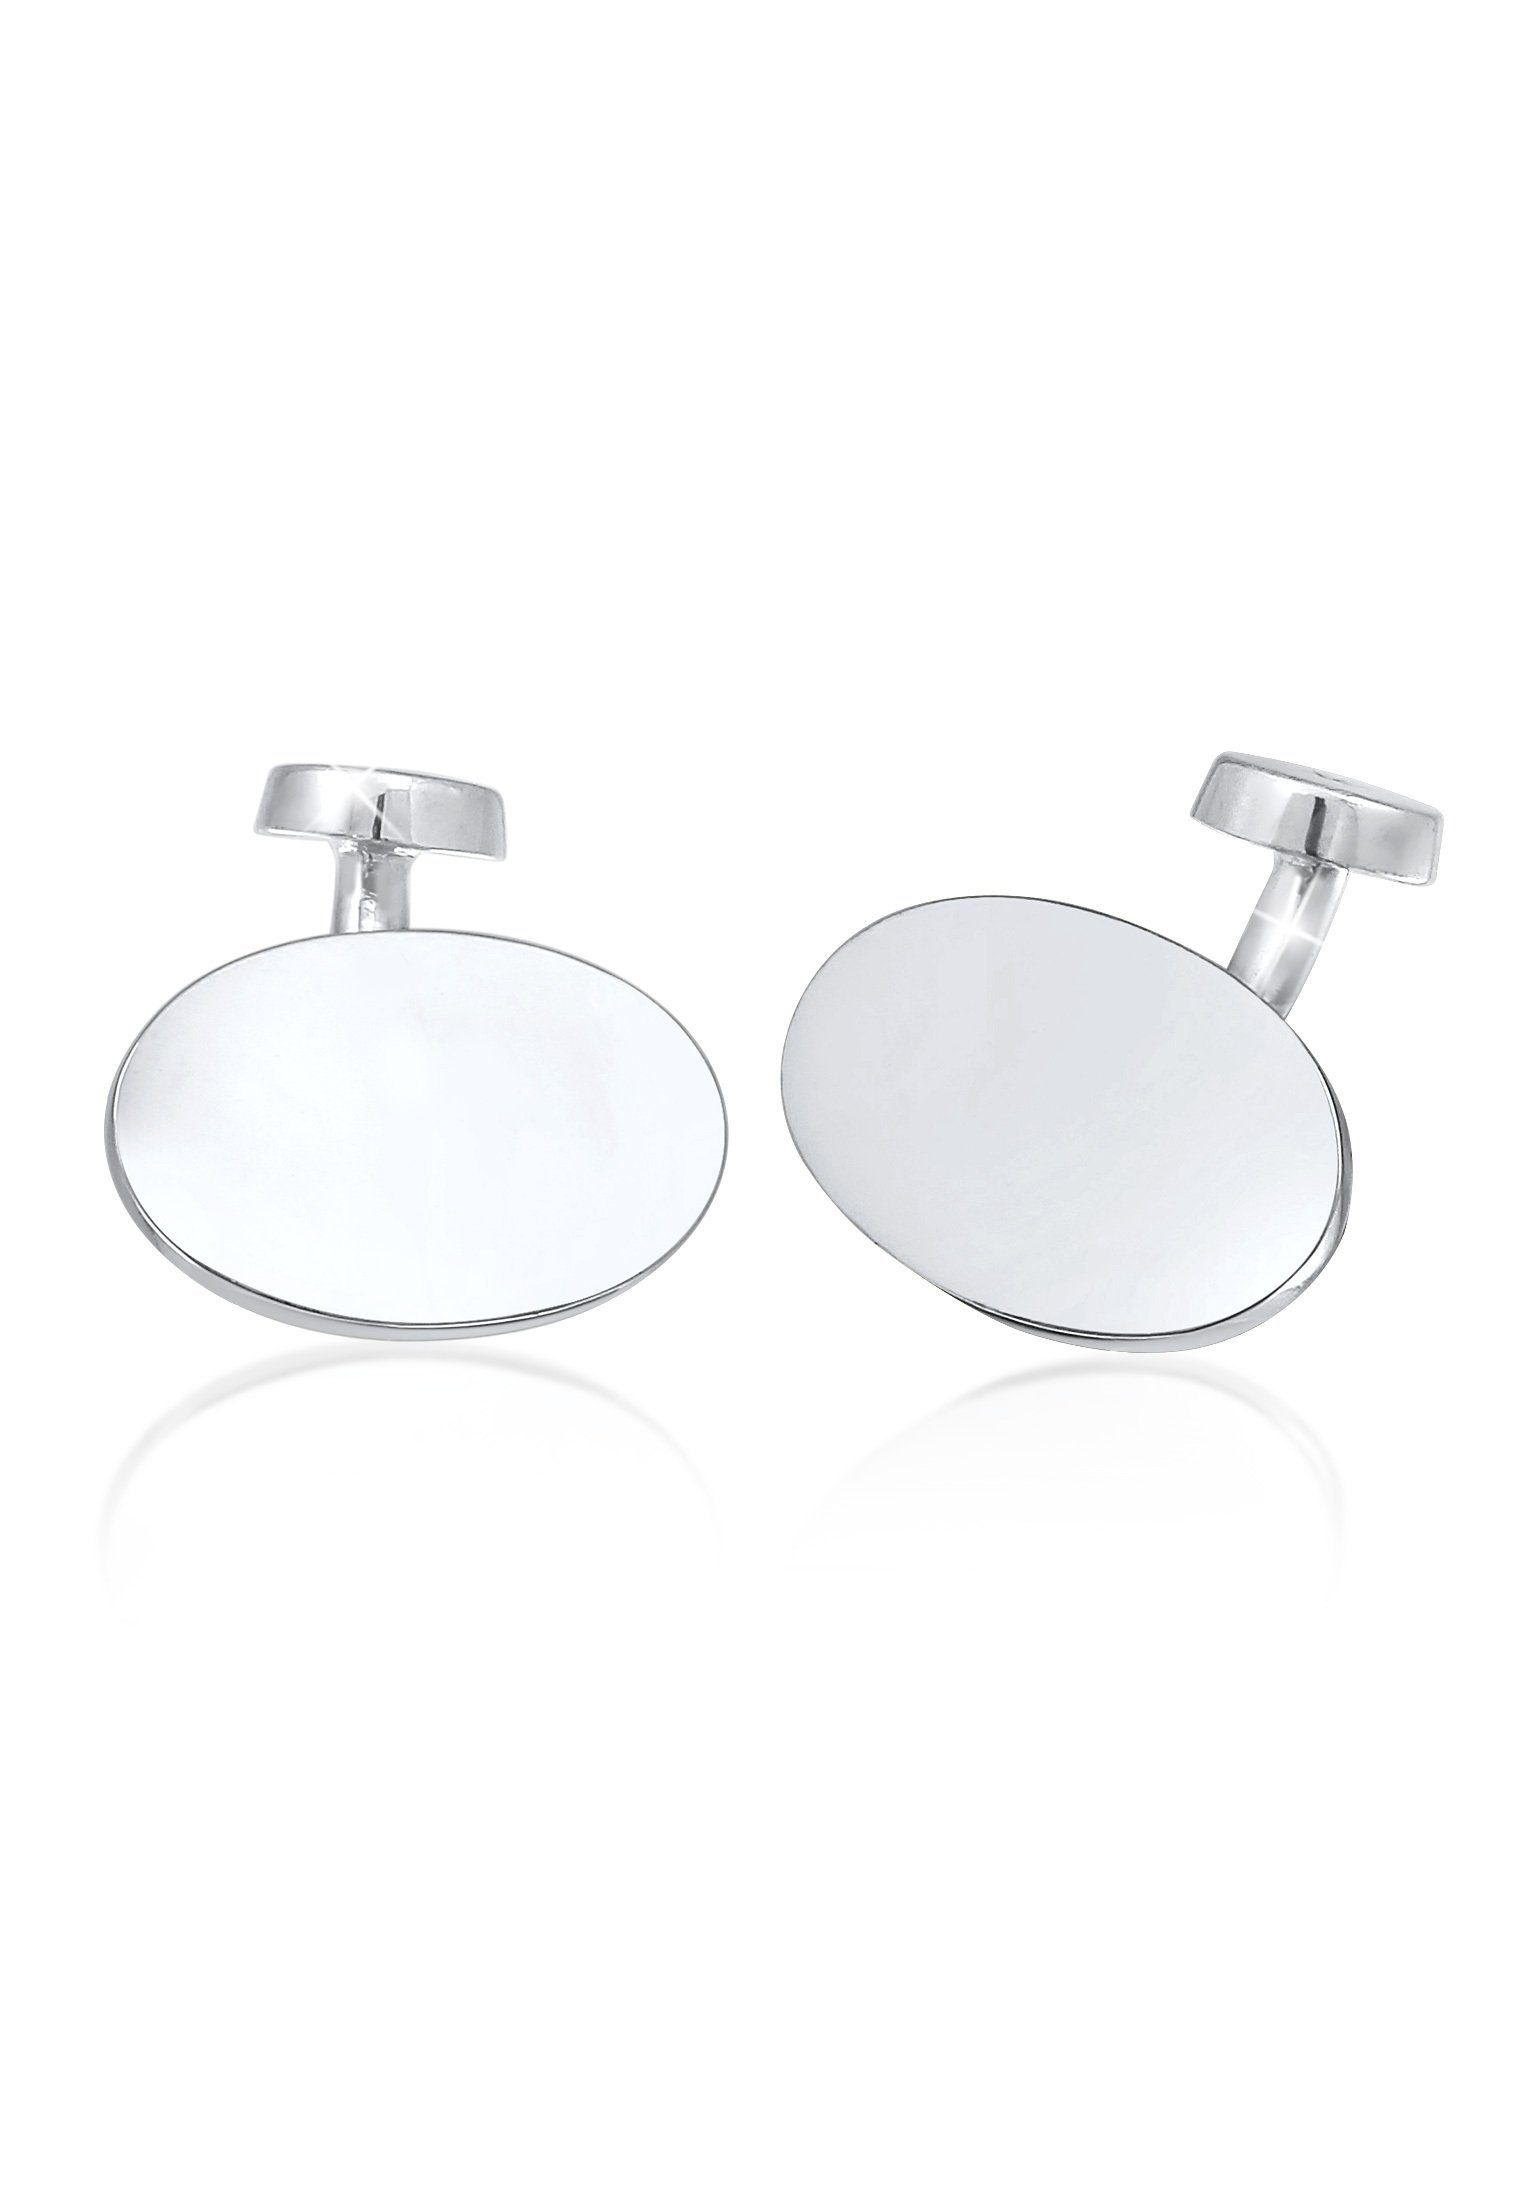 Kuzzoi Manschettenknöpfe Oval Plättchen Poliert Elegant 925 Silber, Plättchen